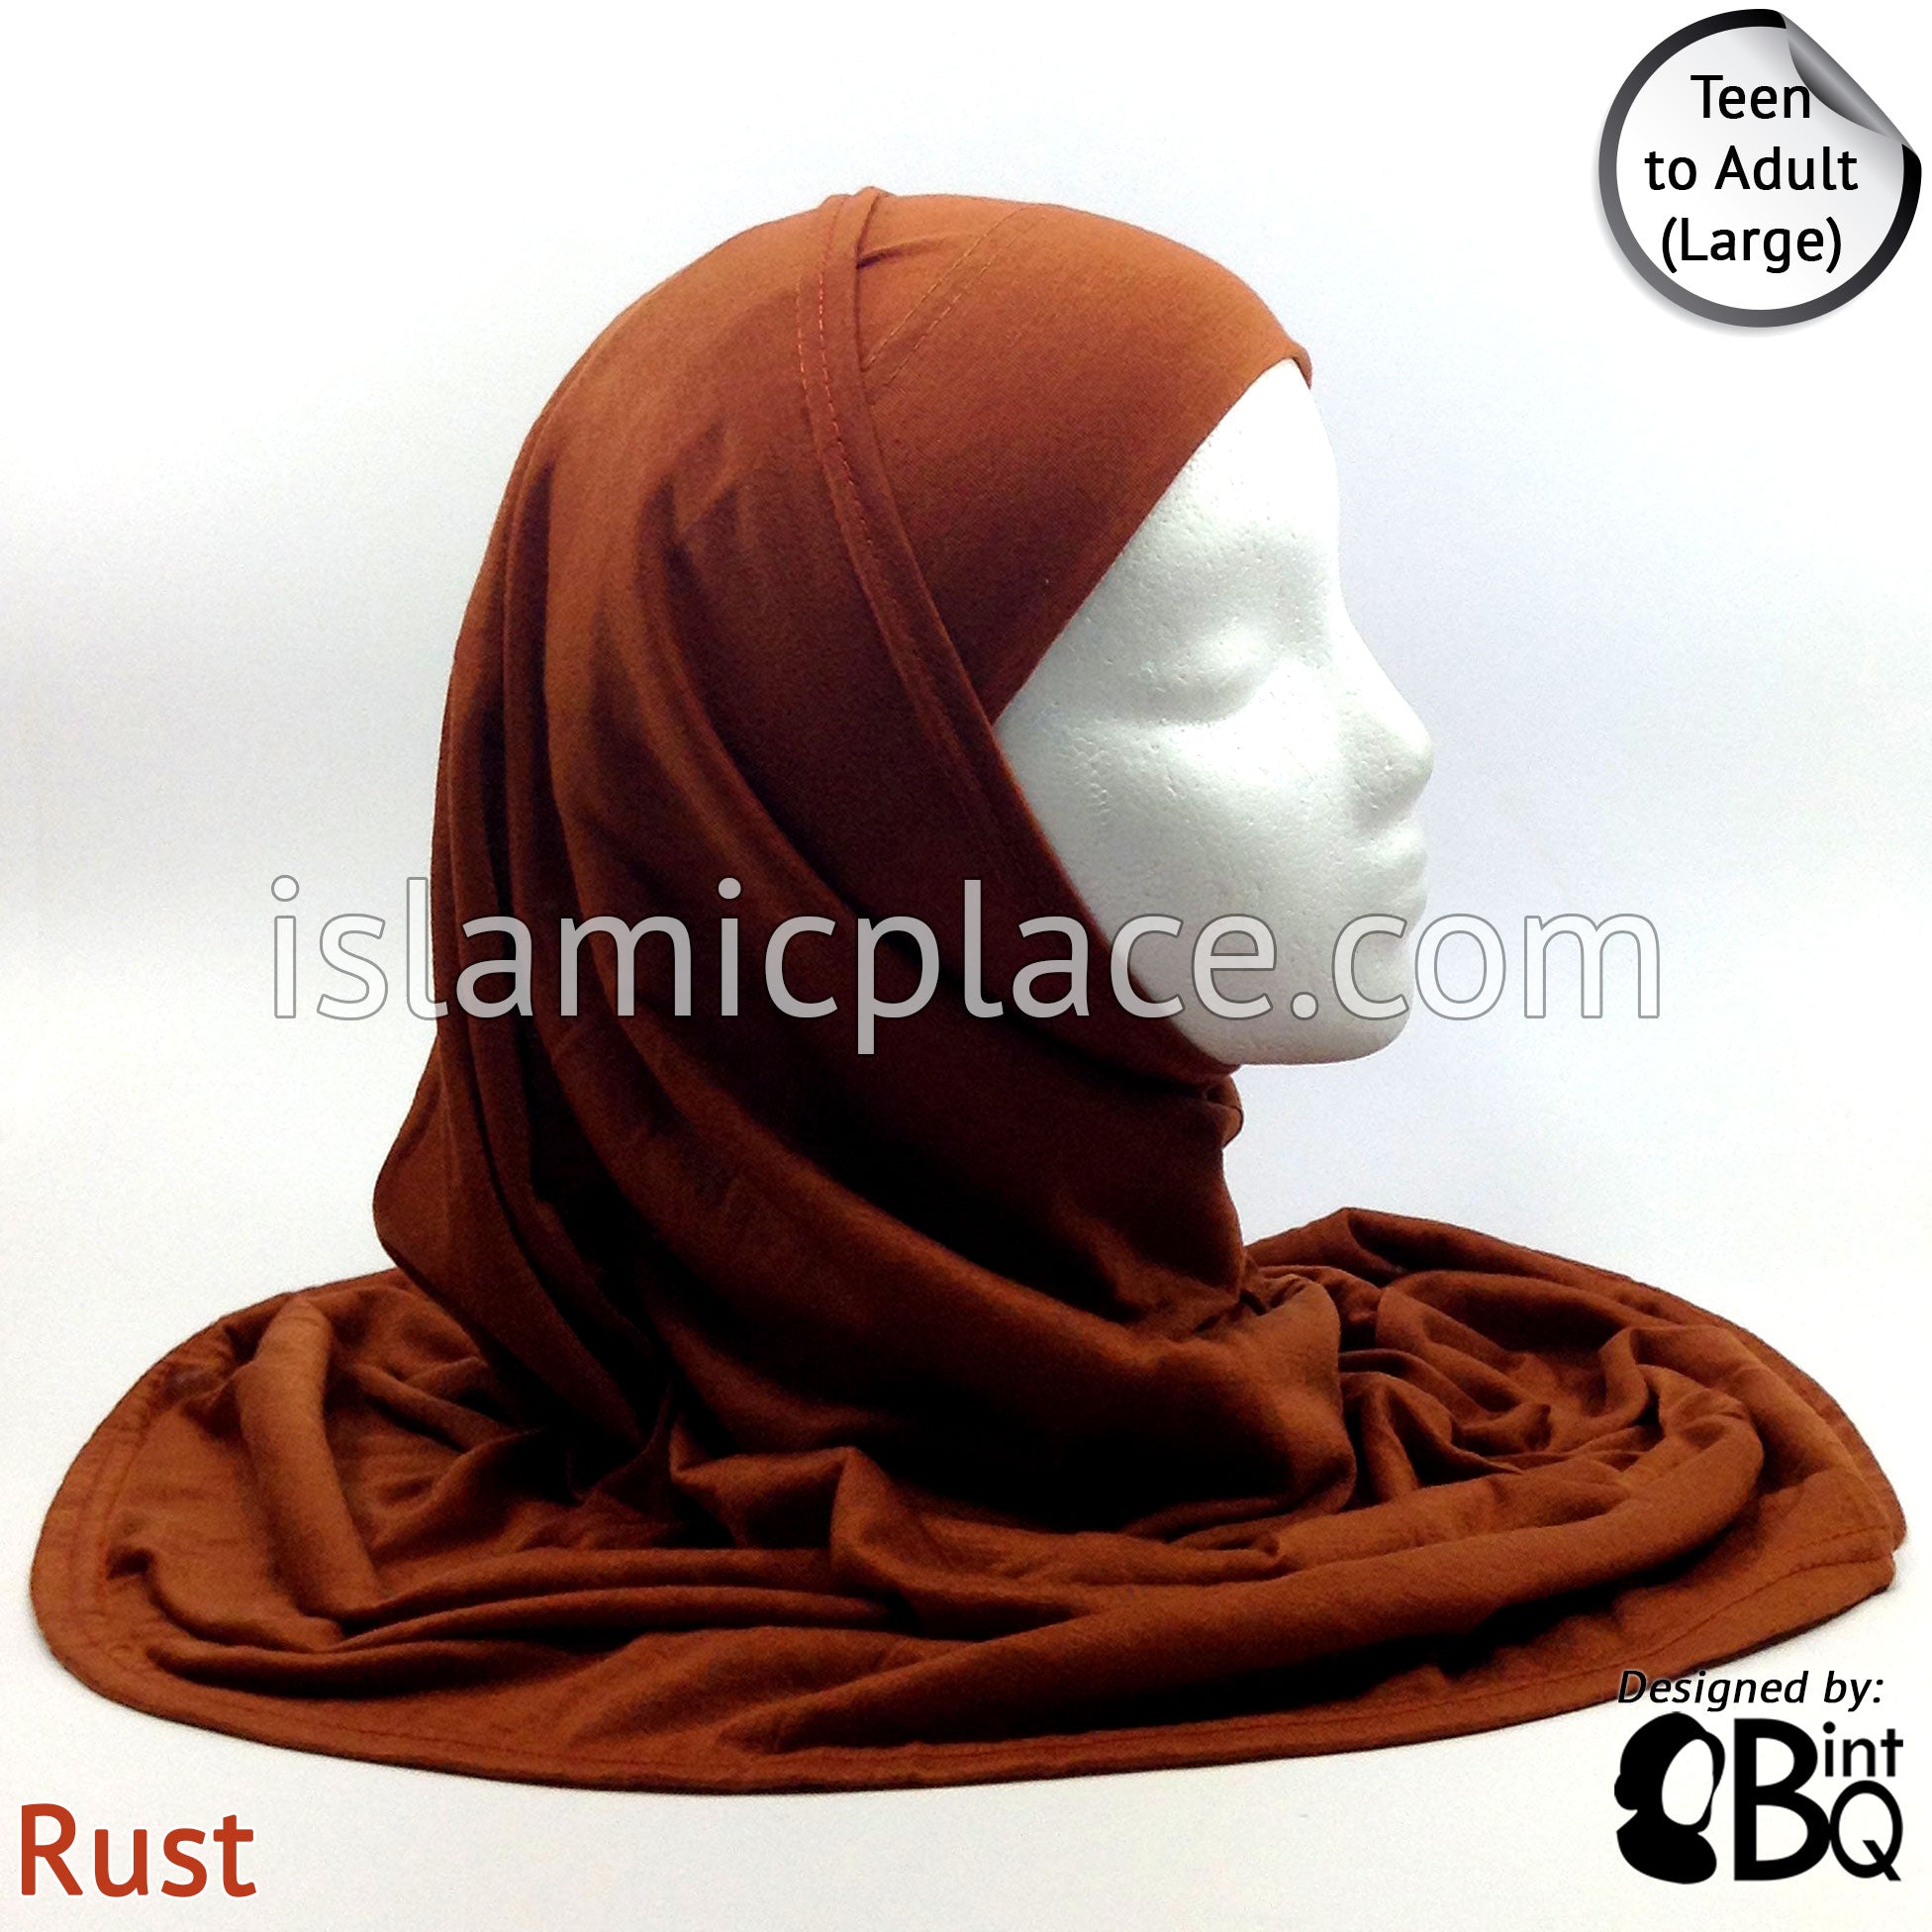 Rust - Plain Teen to Adult (Large) Hijab Al-Amira (2-piece style)